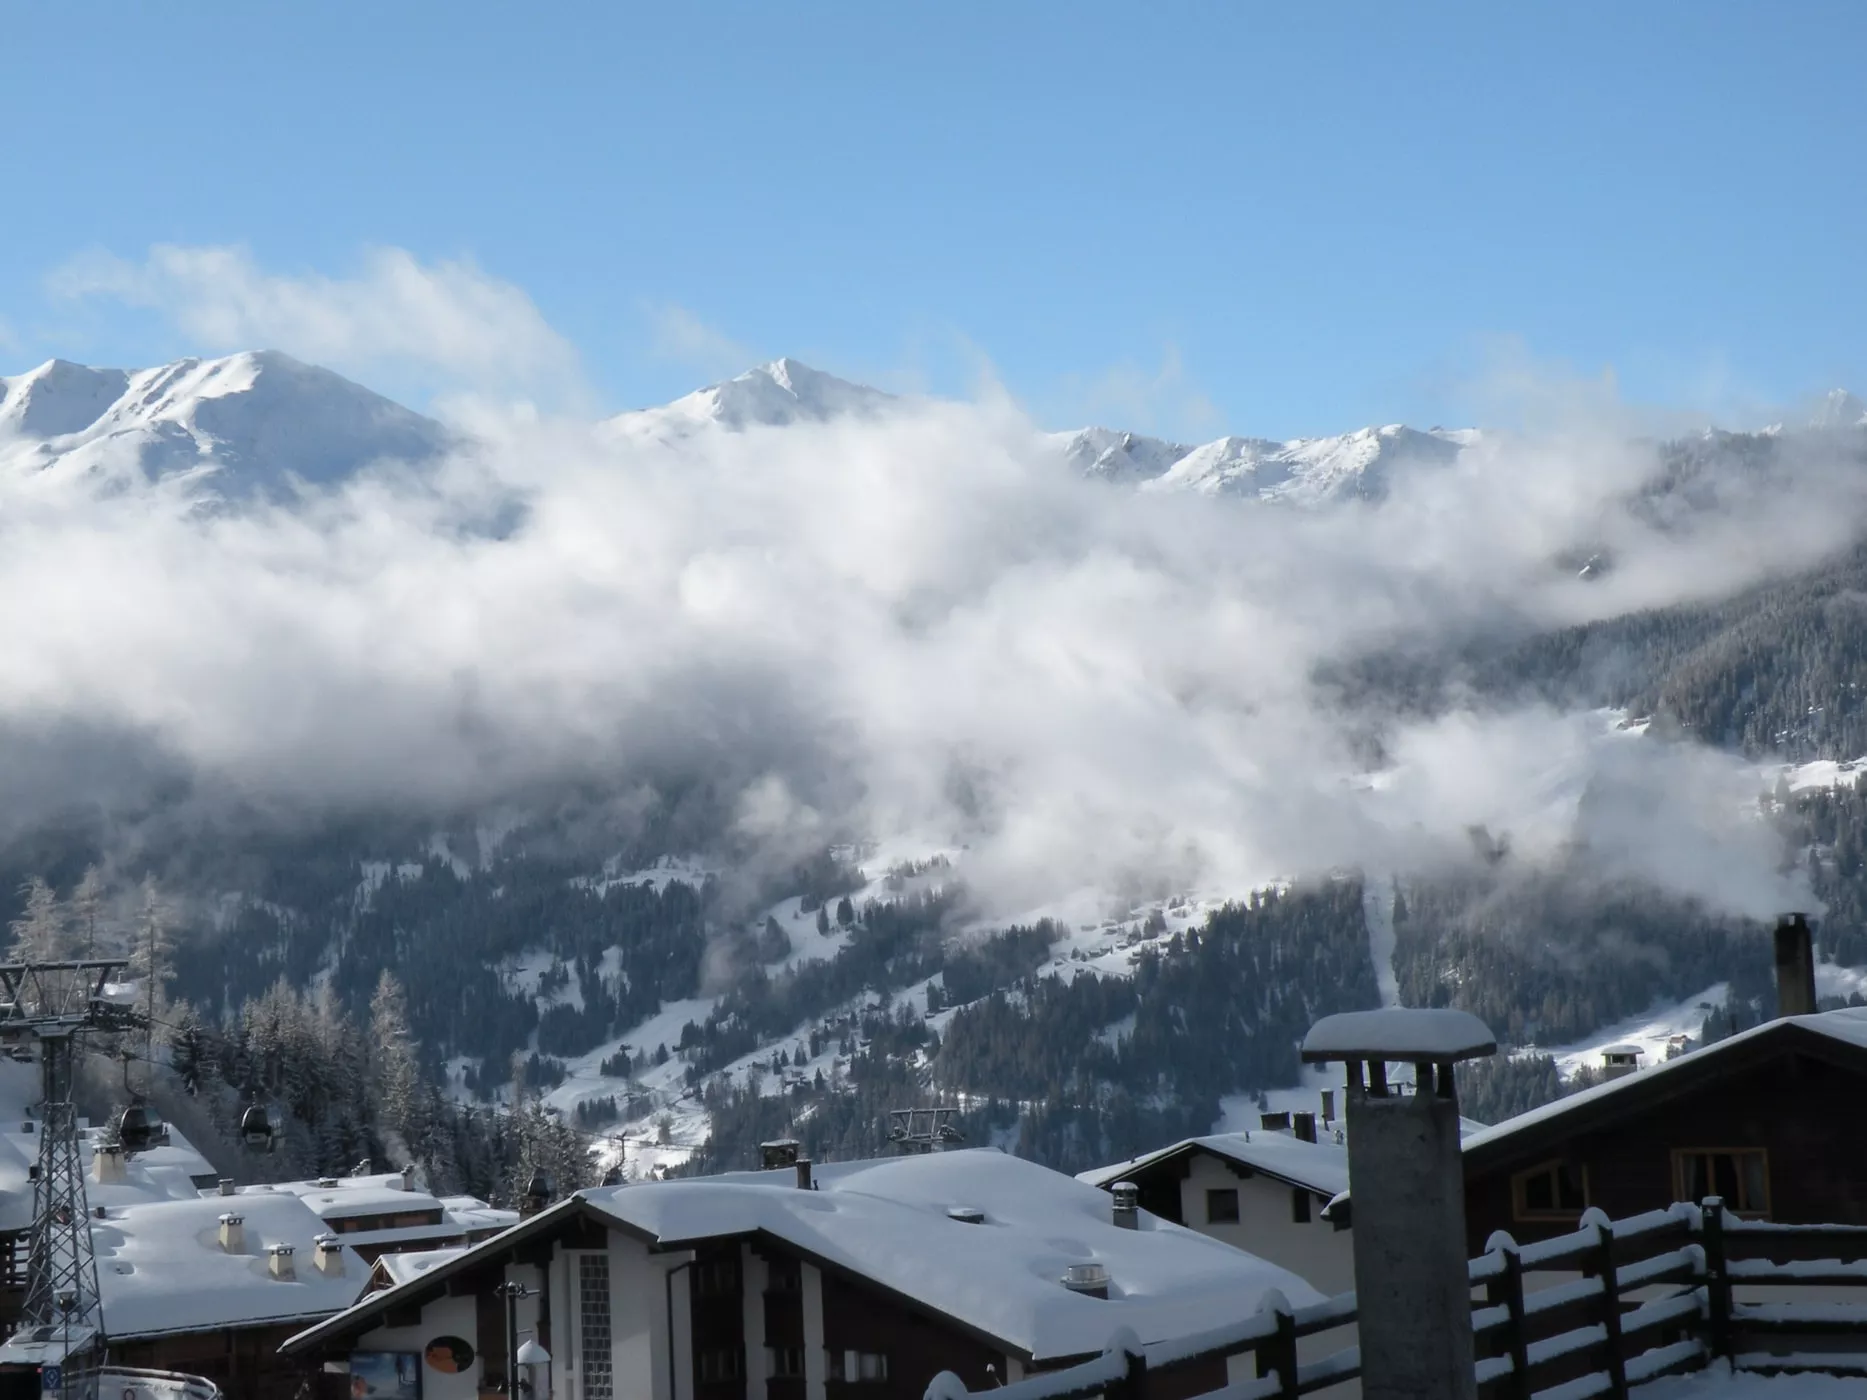 Verbier in Switzerland, Europe | Snowboarding,Skiing - Rated 4.9